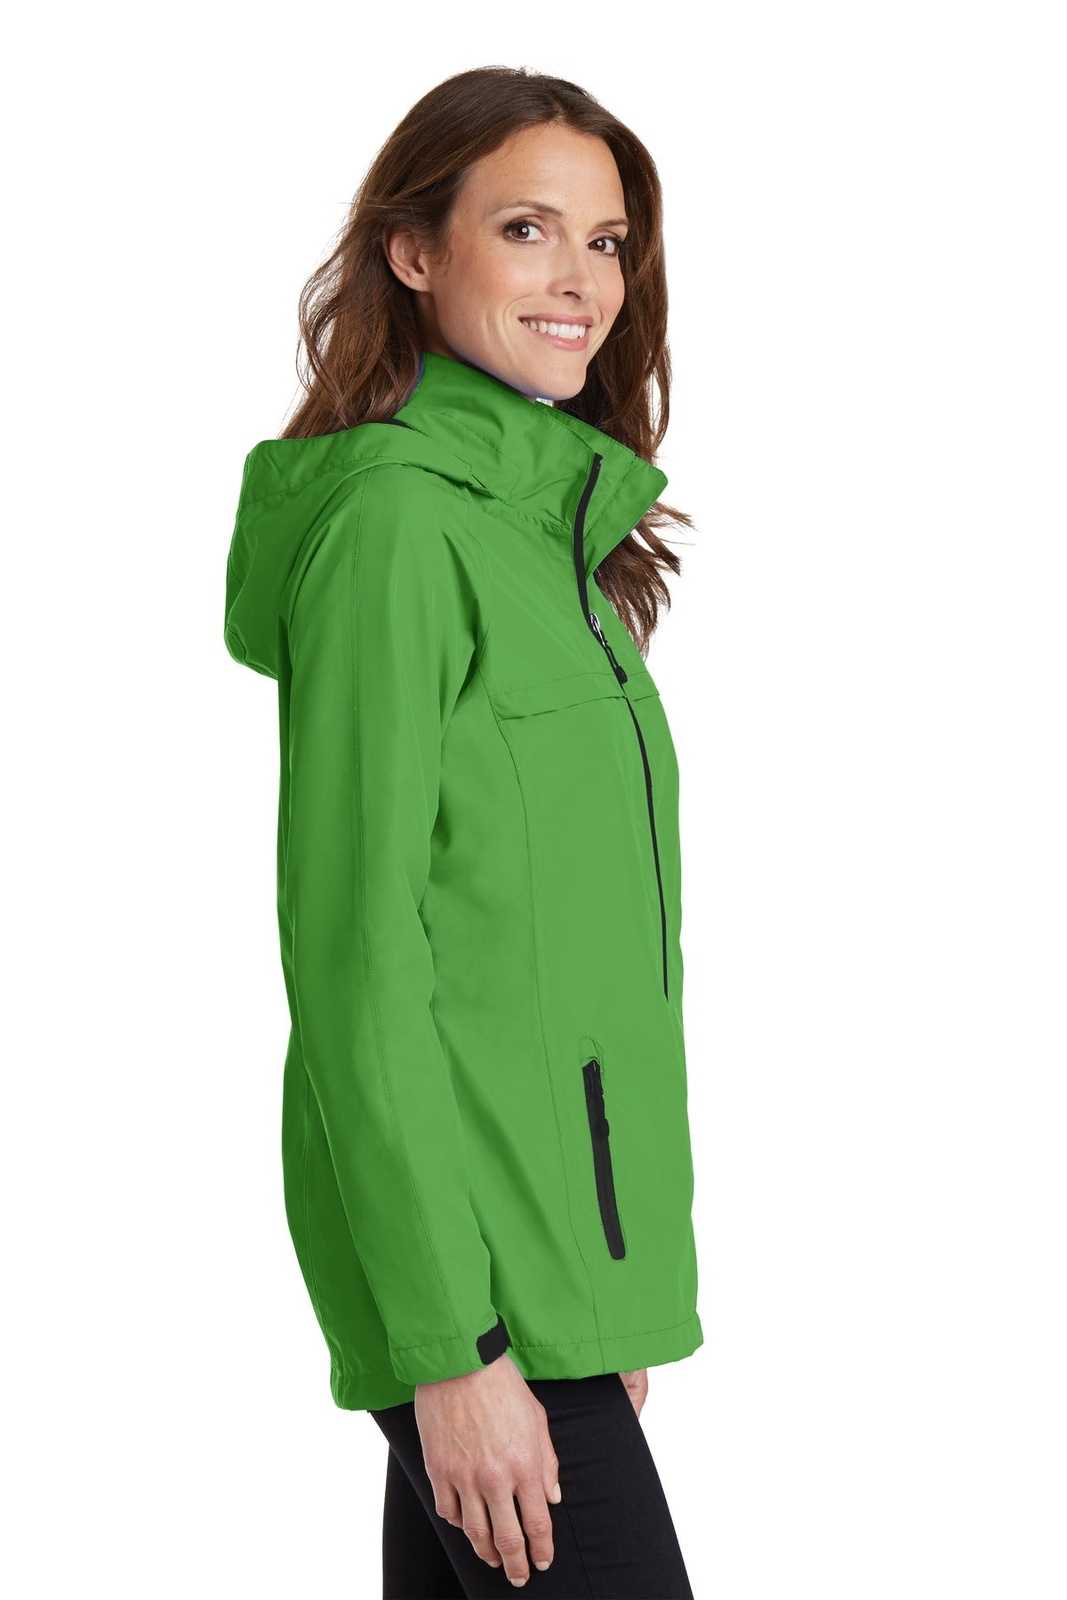 Port Authority L333 Ladies Torrent Waterproof Jacket - Vine Green - HIT a Double - 3